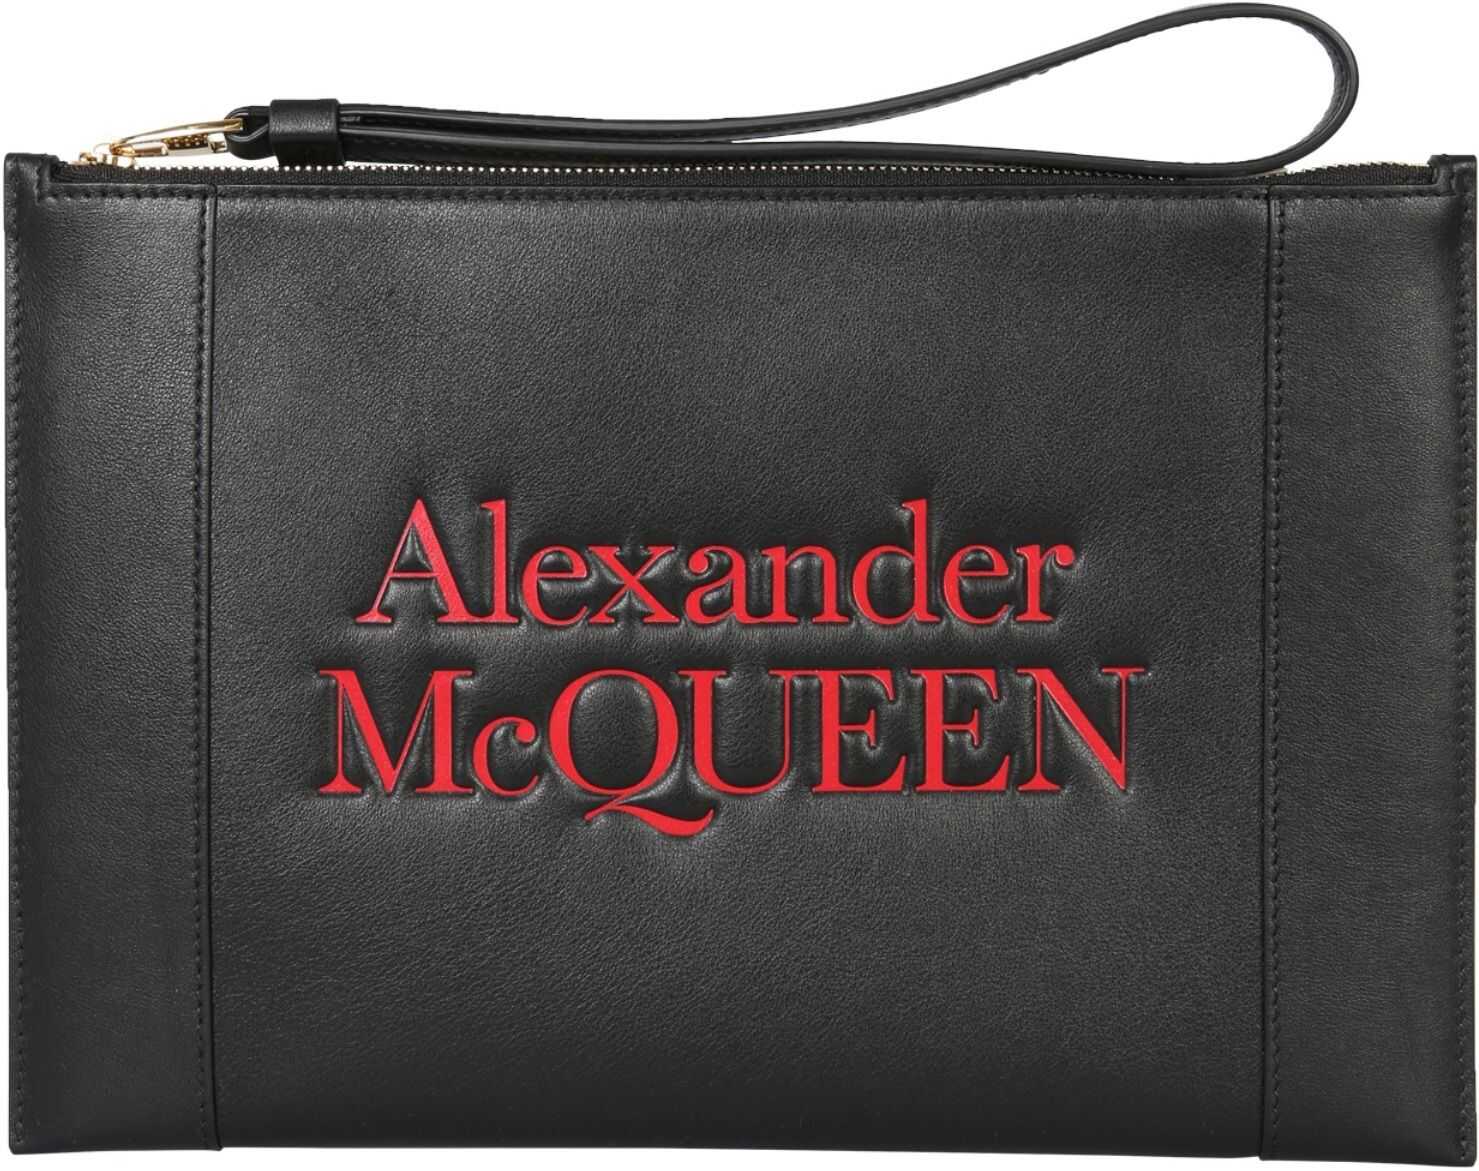 Alexander McQueen Clutch Signature 633063_1X3H11000 BLACK imagine b-mall.ro